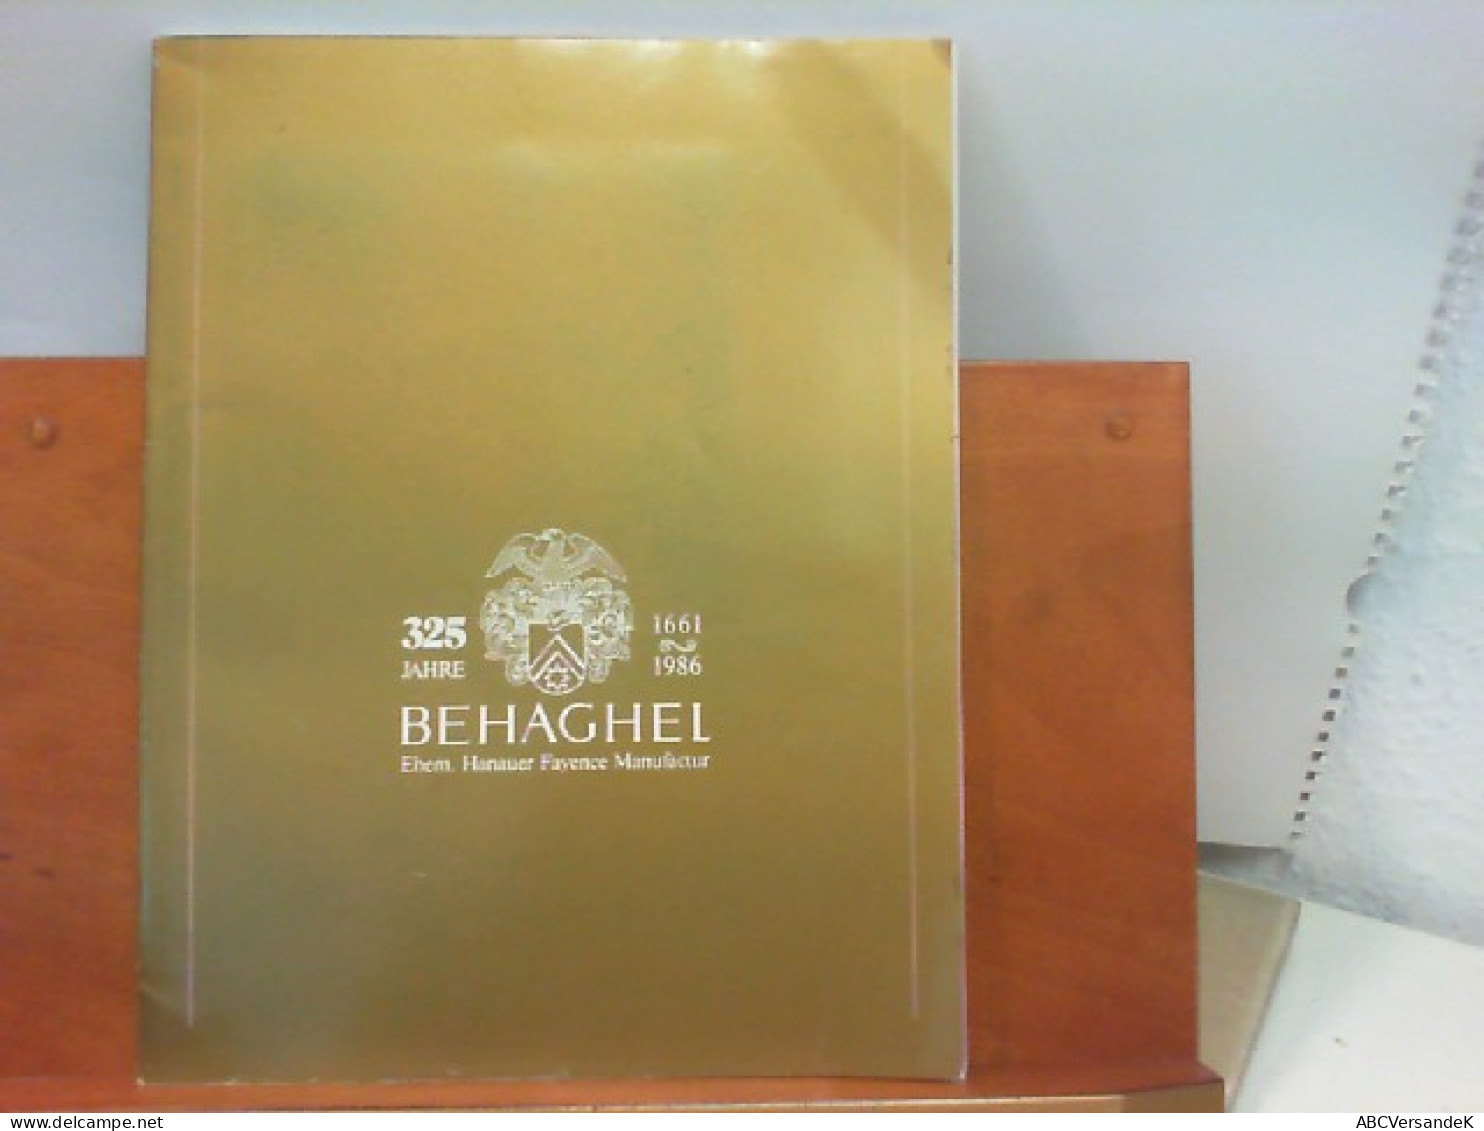 Katalog 325 Jahre Beghaghel In Frankfurt Am Main 1661 - 1986 - Technical